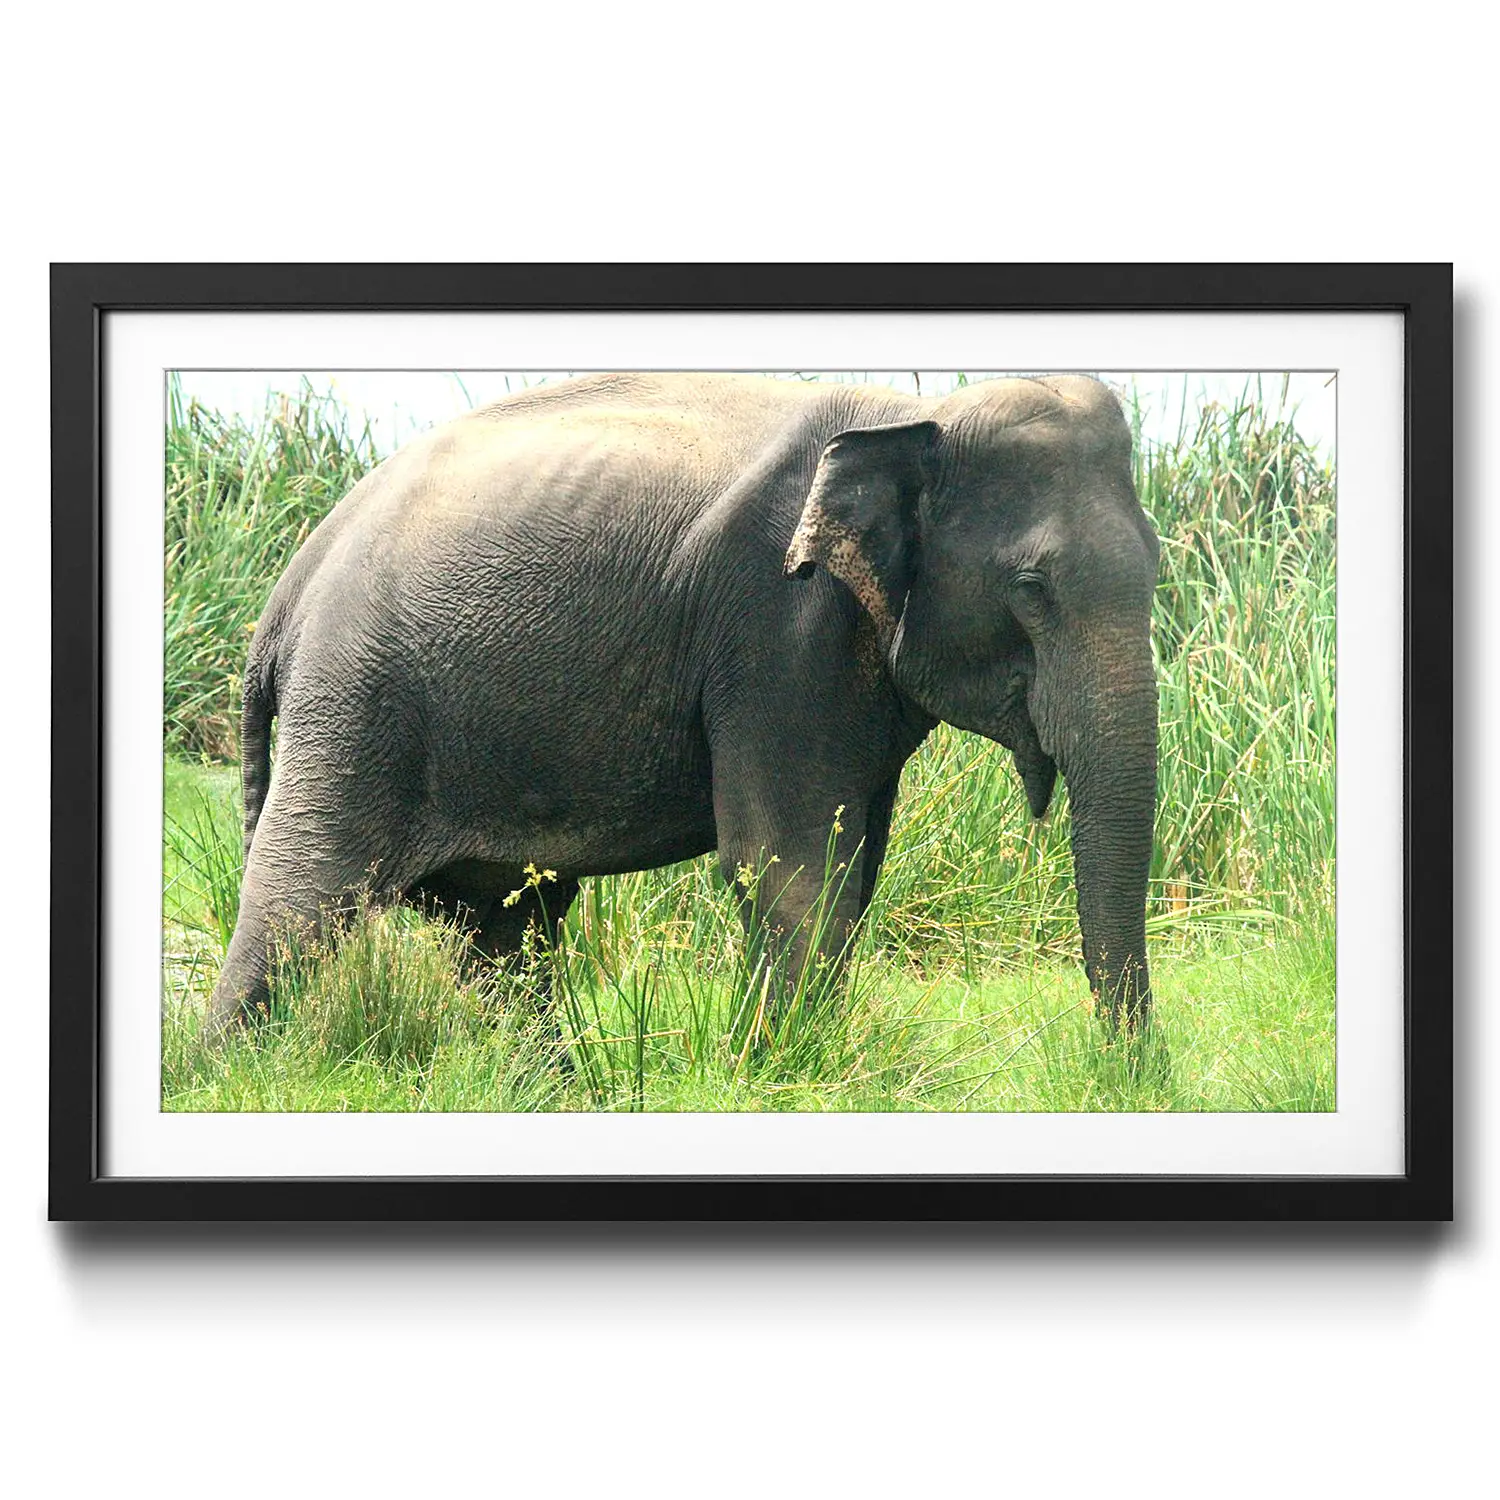 Gerahmtes Old Bild Elephant